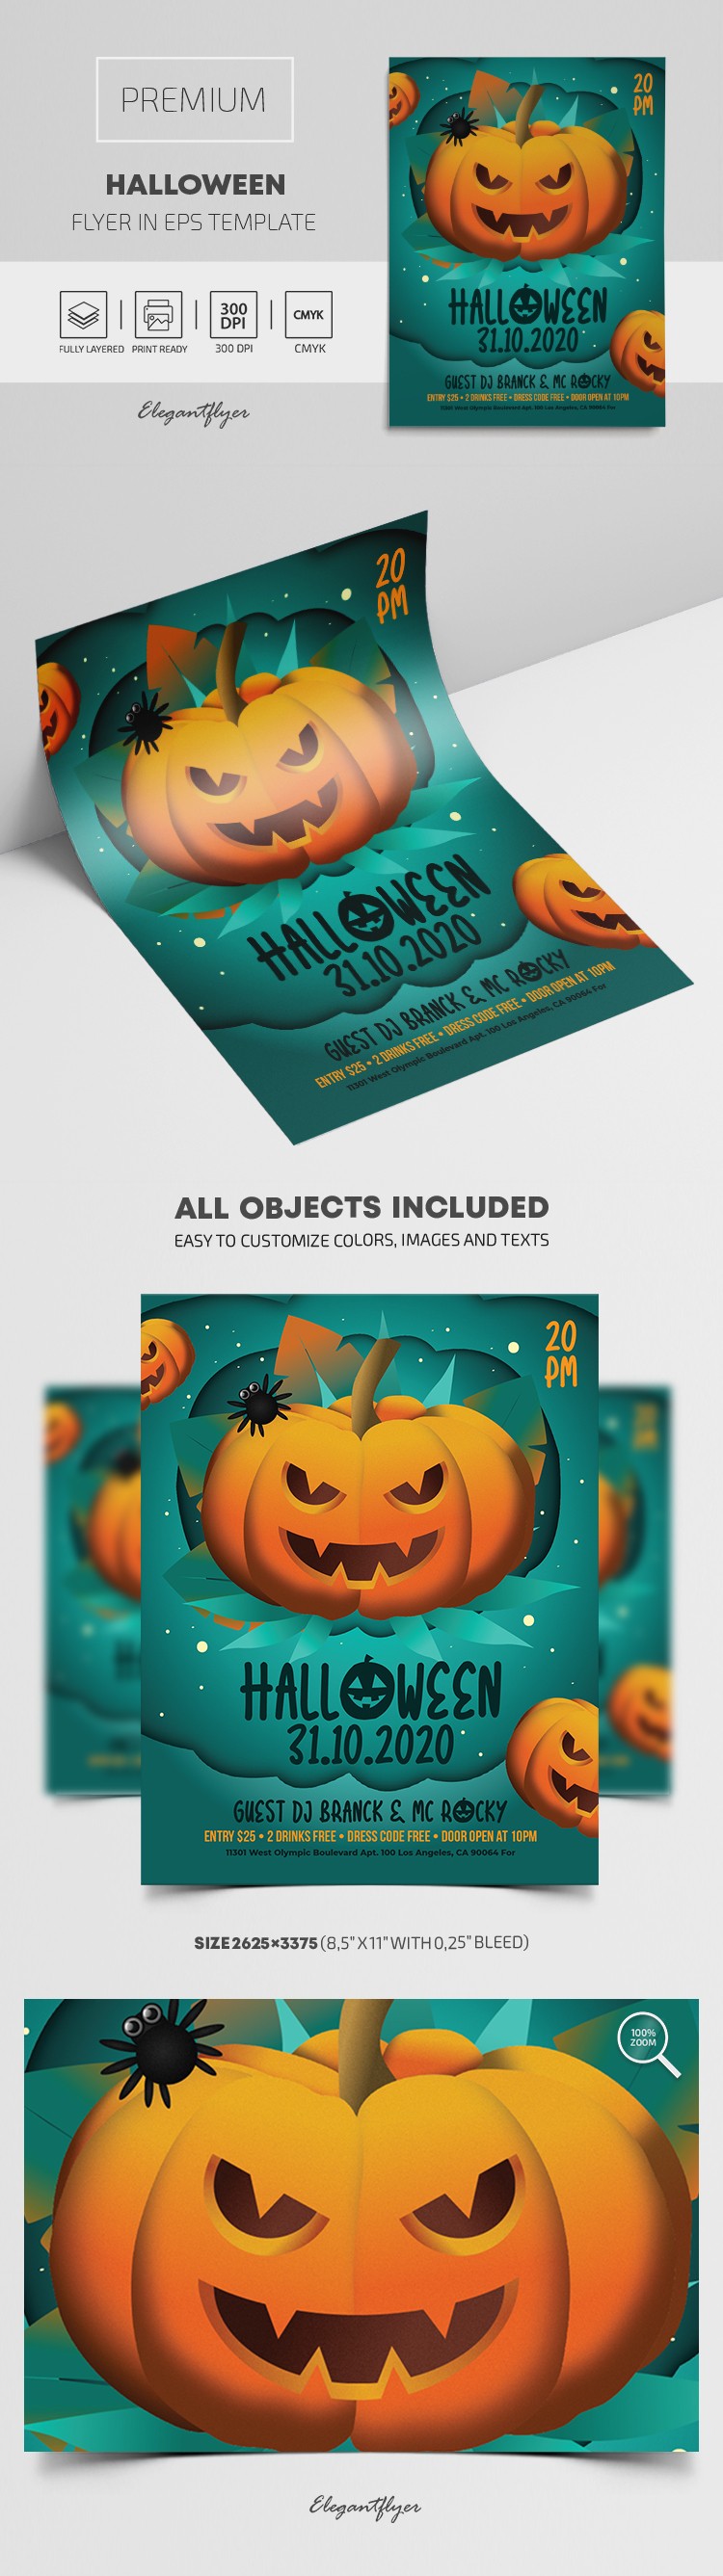 Affiche vectorielle d'Halloween by ElegantFlyer